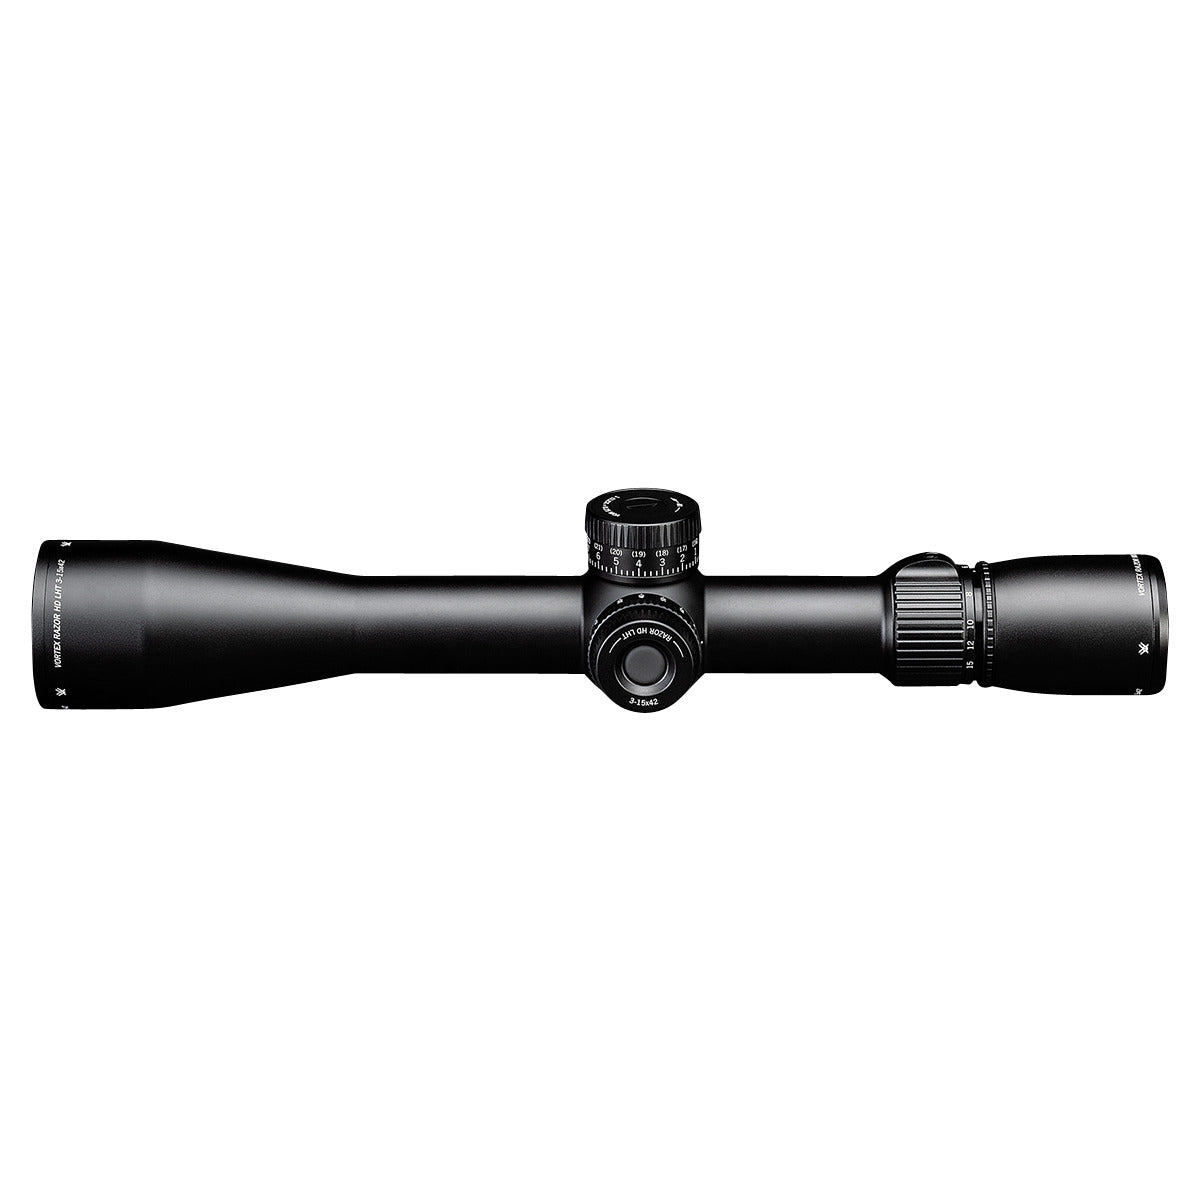 Vortex Razor LHT 3-15x42 HSR-5i MOA Riflescope in Vortex Razor LHT 3-15x42 HSR-5i MOA Riflescope by Vortex Optics | Optics - goHUNT Shop by GOHUNT | Vortex Optics - GOHUNT Shop